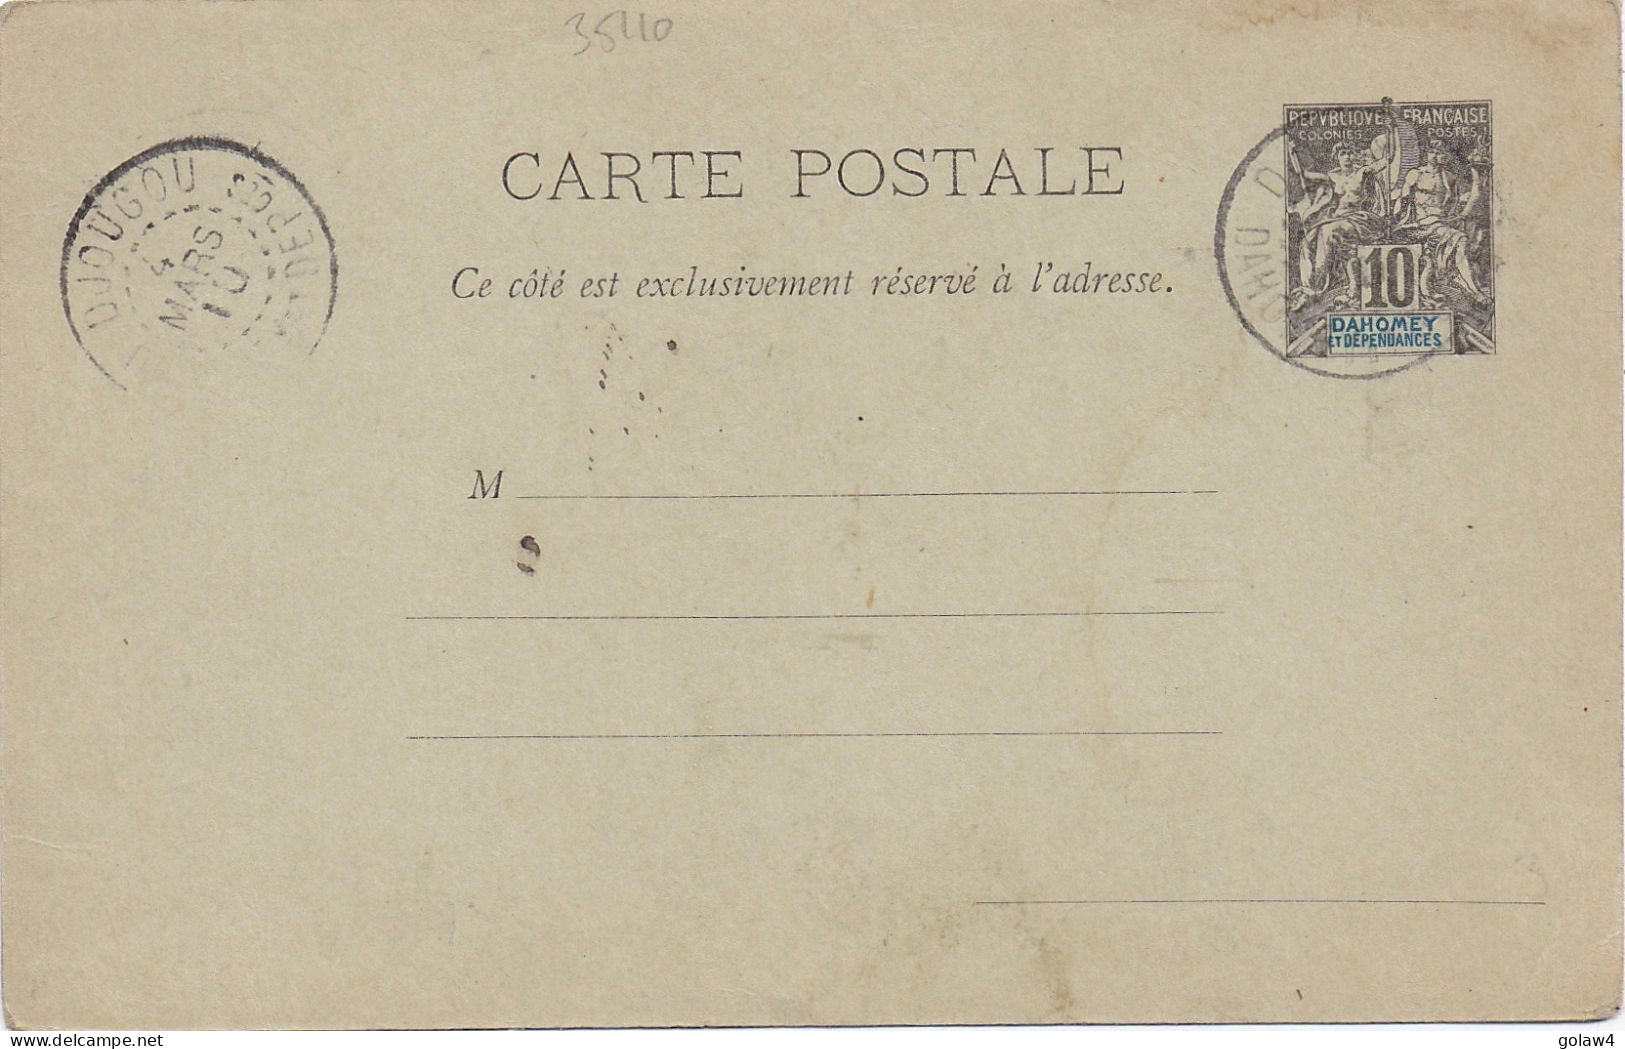 35110# ENTIER POSTAL CARTE POSTALE Obl DJOUGOU DAHOMEY ET DEPENDANCES 1910 STATIONERY GANZSACHE - Storia Postale